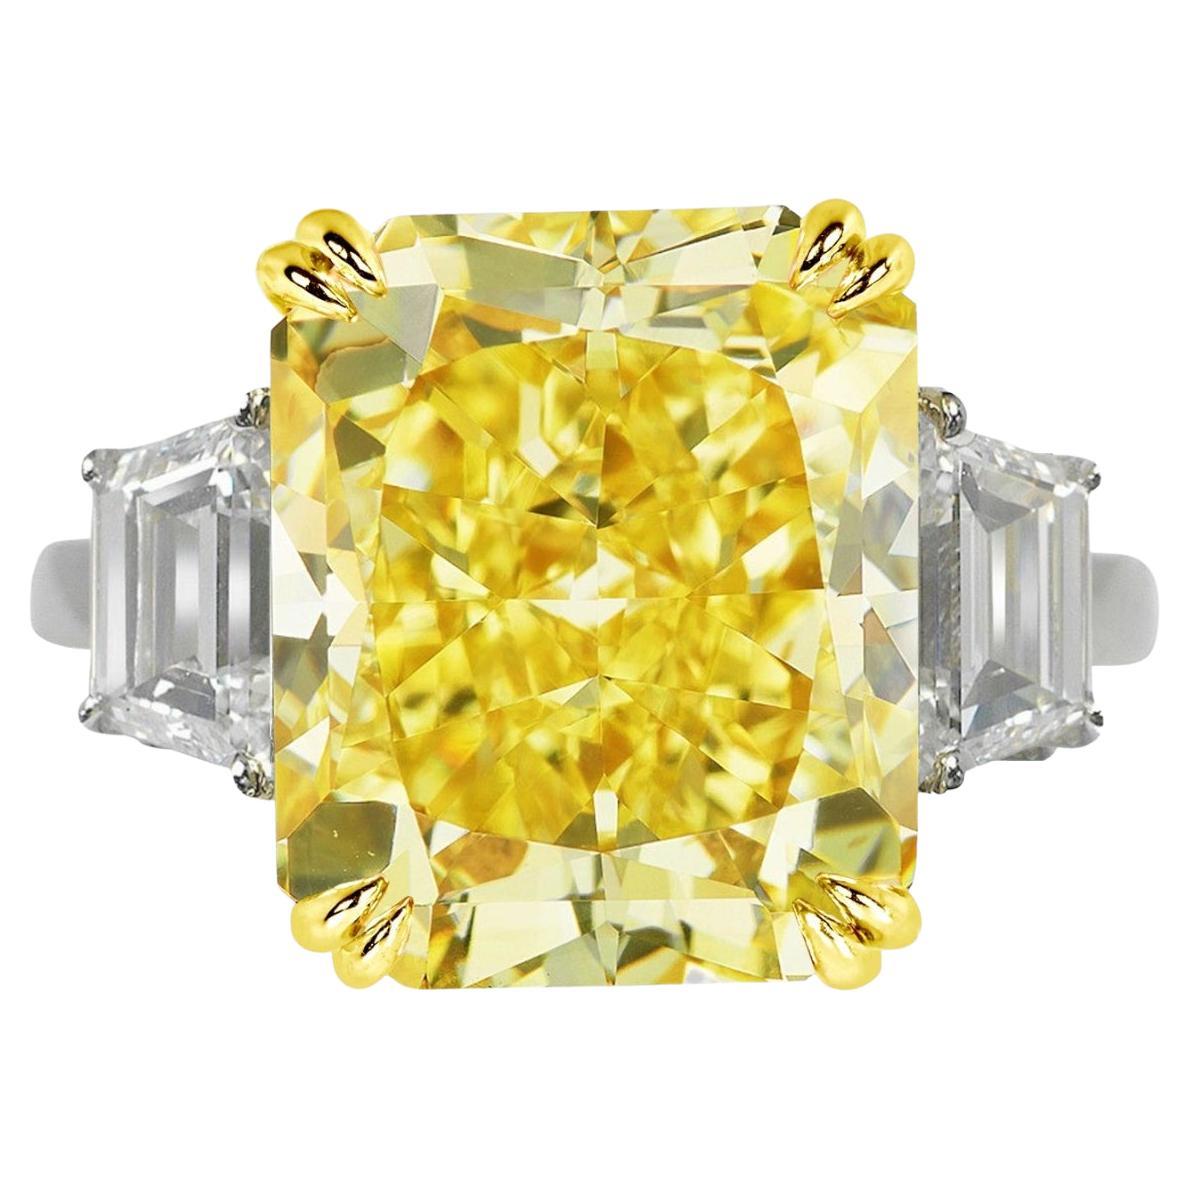 GIA Certified 5 Carat Fancy Yellow Clarity Radiant Diamond Ring